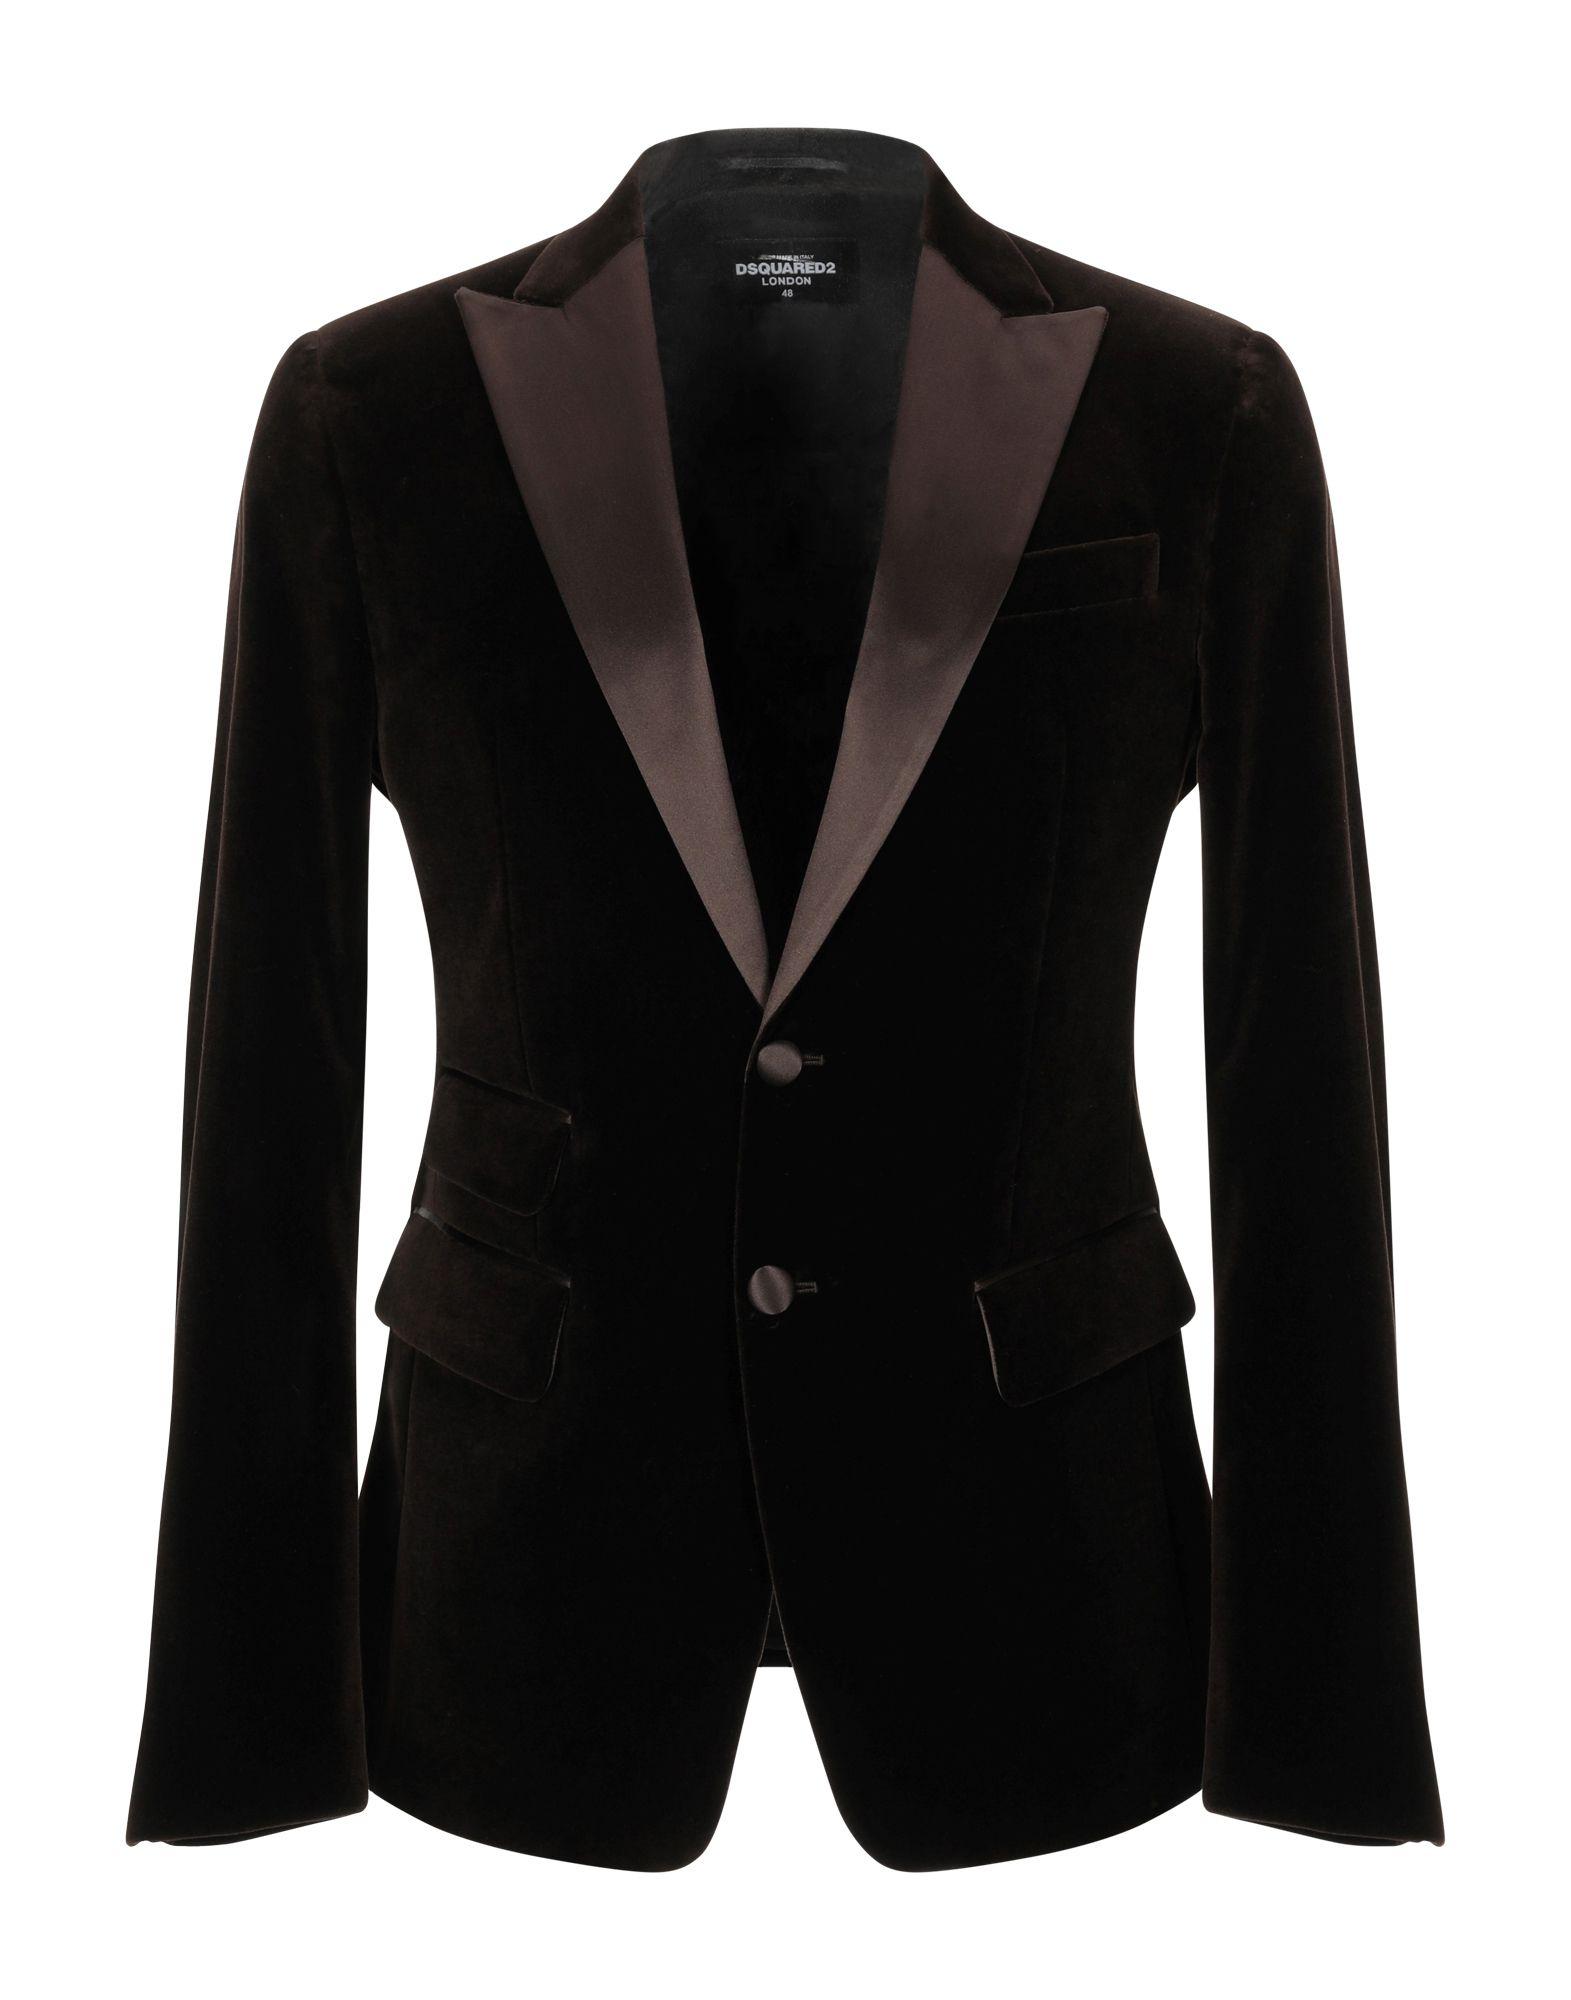 DSquared² Velvet Suit Jacket in Dark Brown (Brown) for Men - Lyst